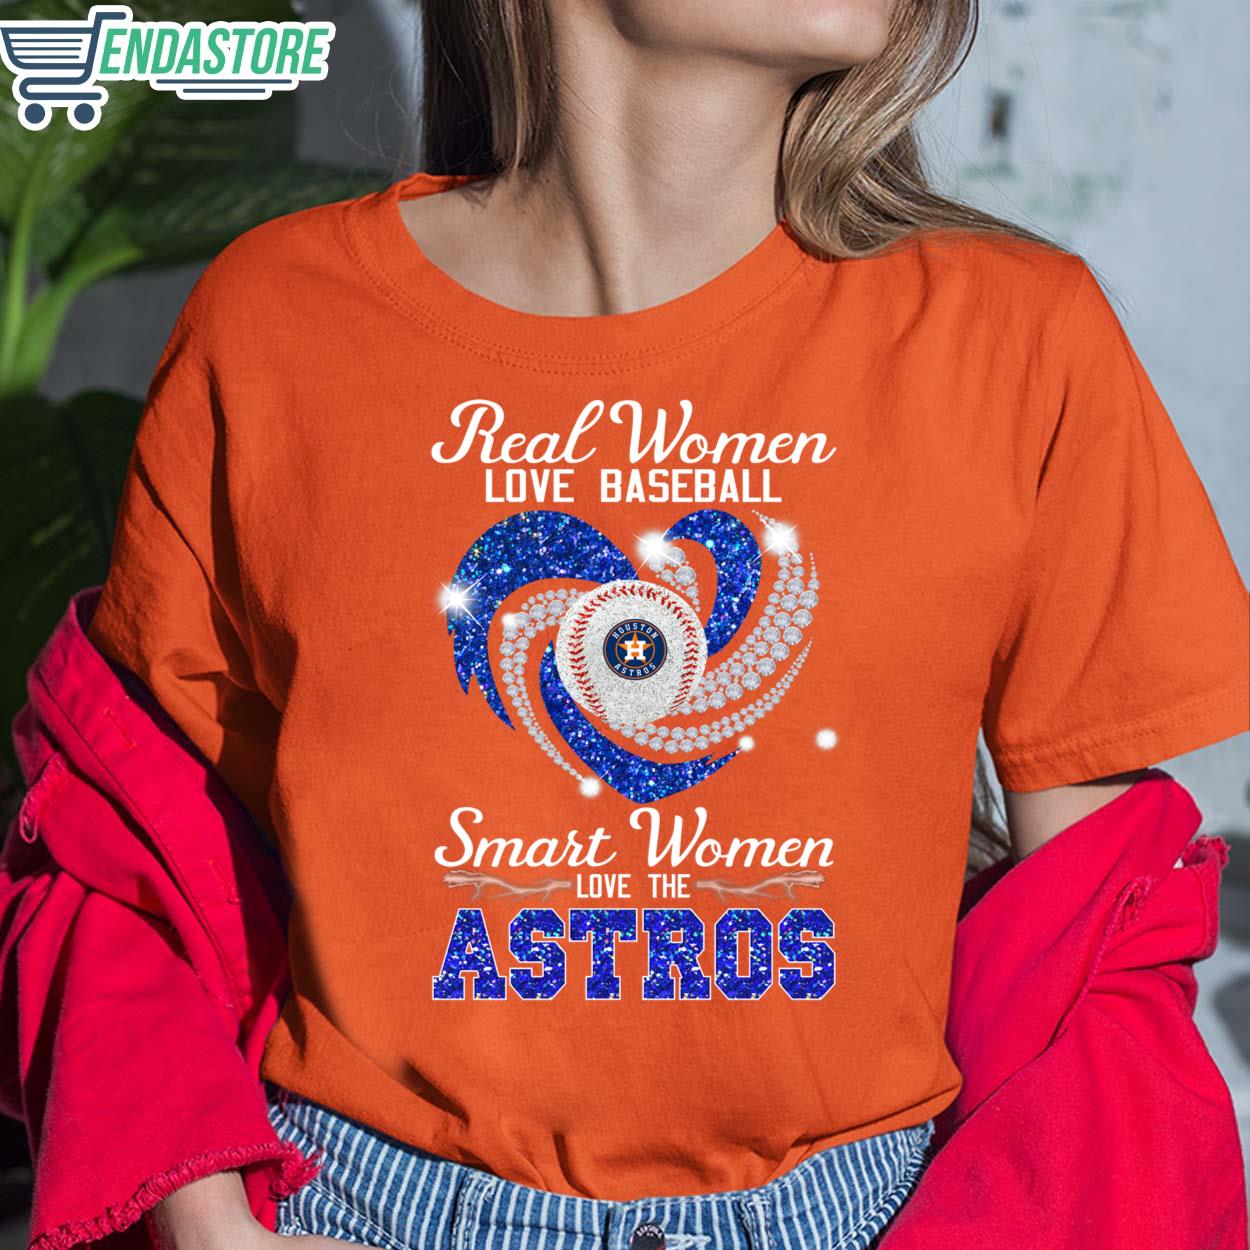 women astros t shirts